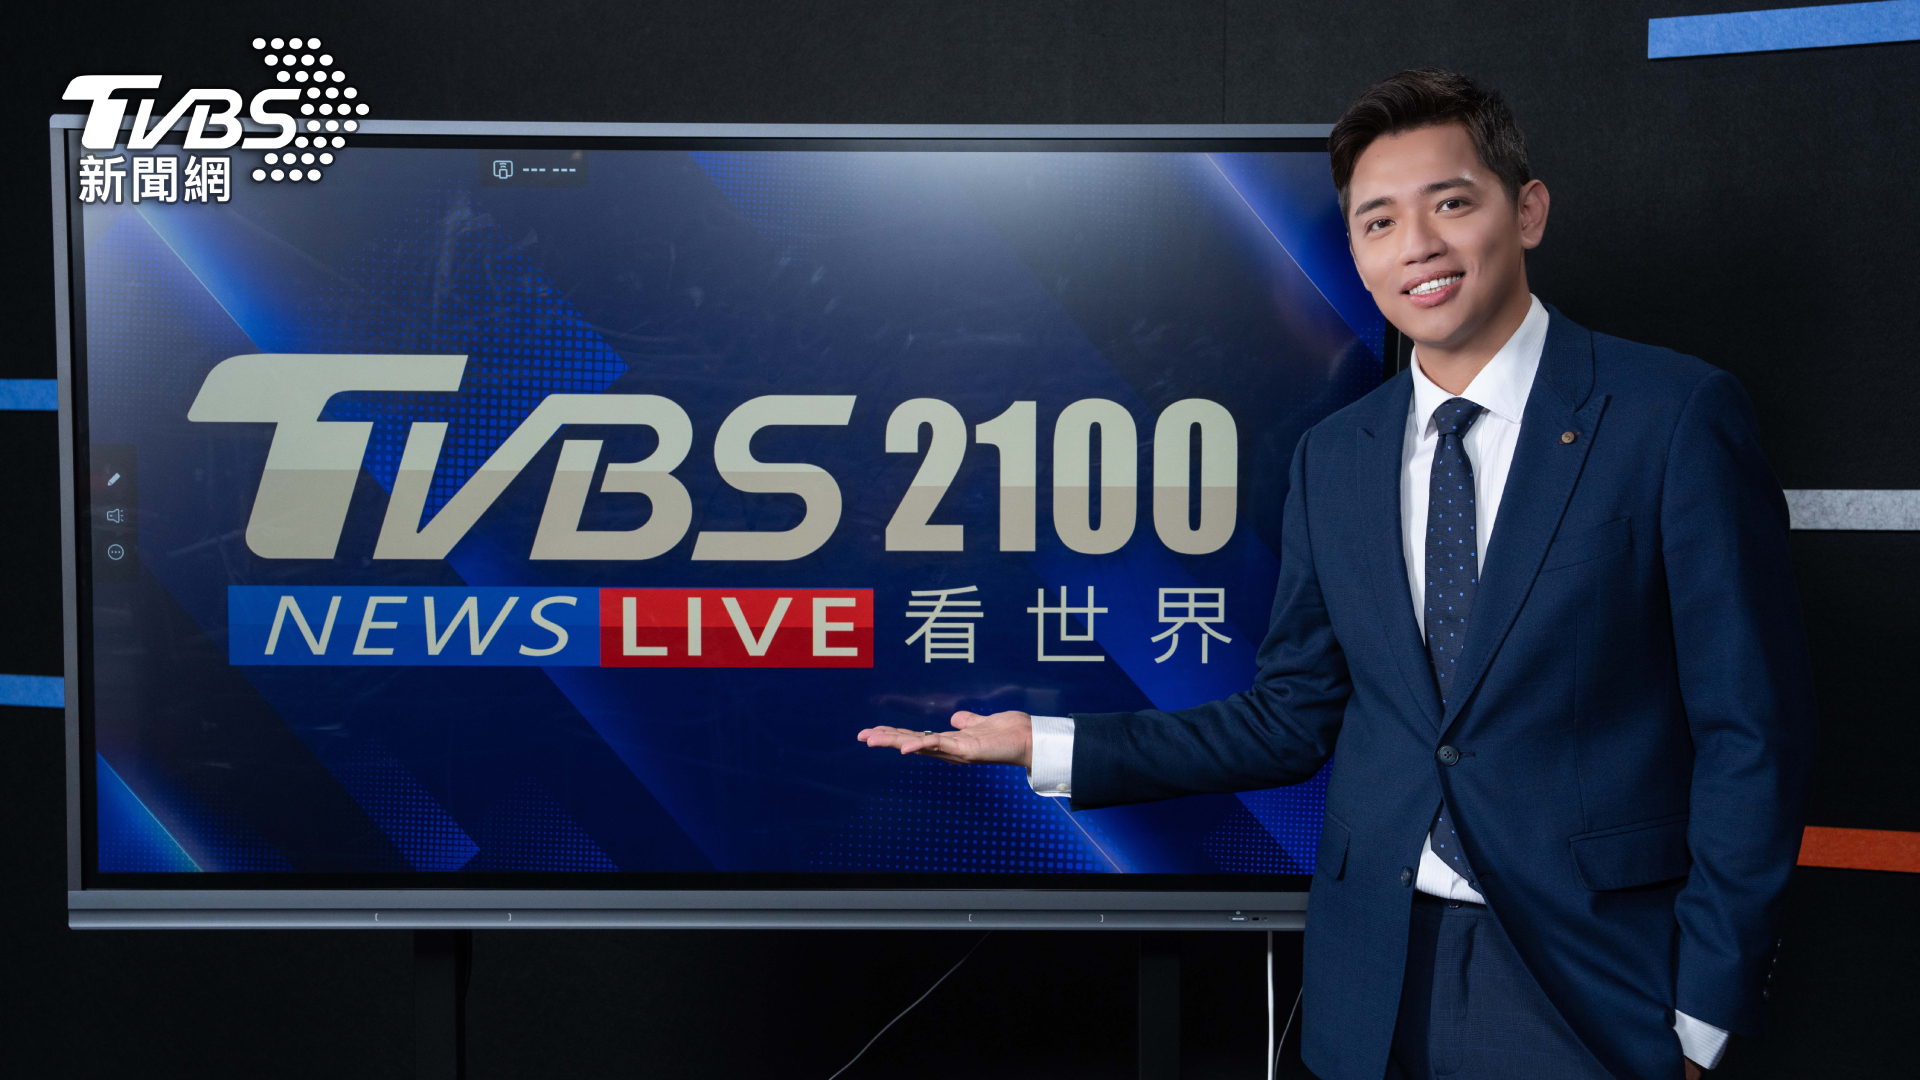 TVBS新聞網晚間9點直播單元「TVBS看世界」將由彭志宇擔任主播 (圖/TVBS) 